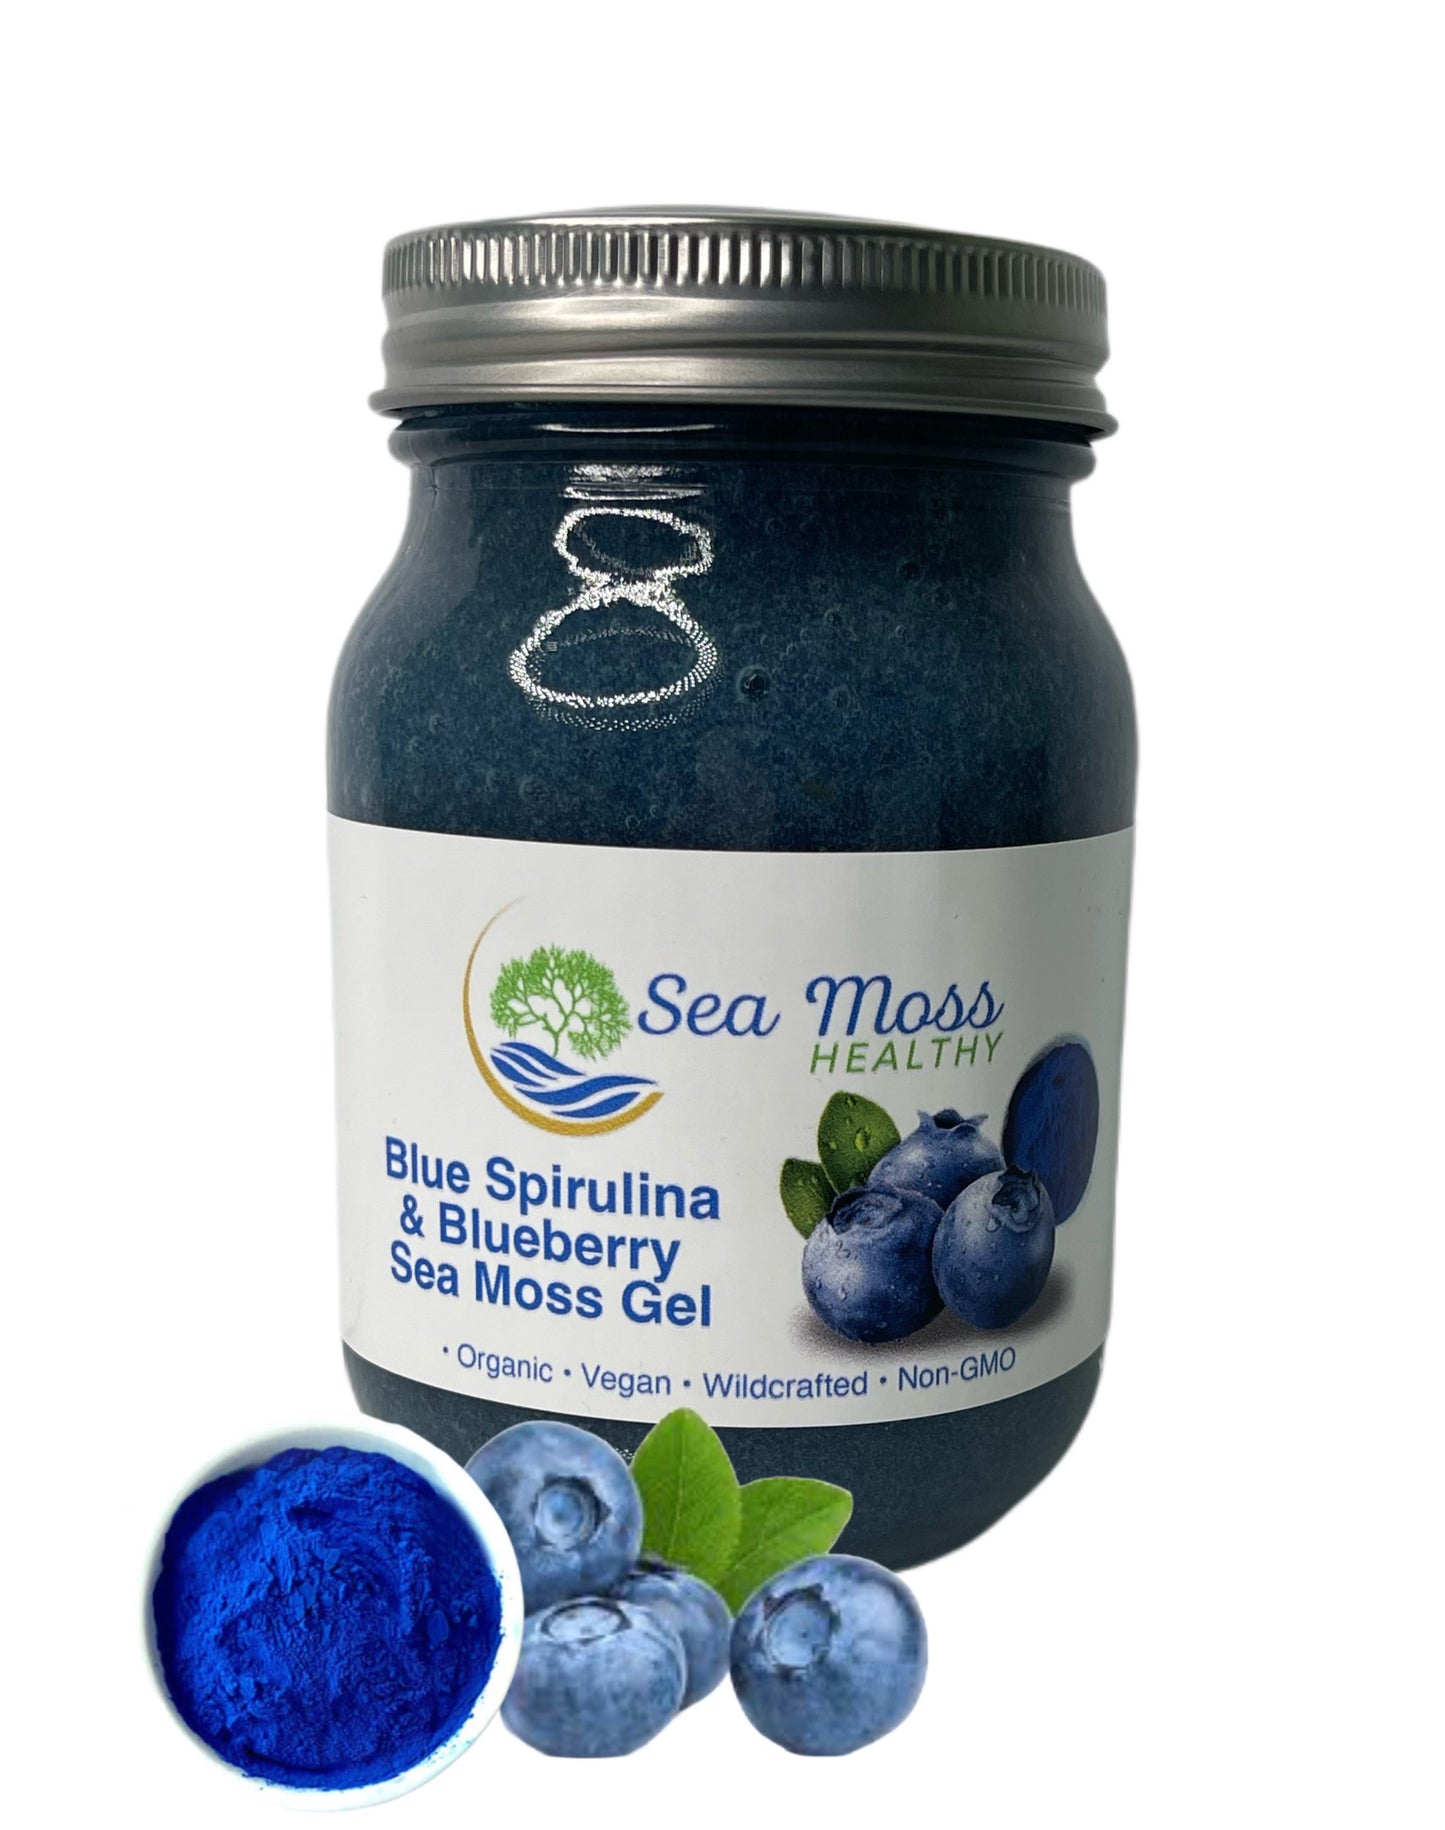 Blue Spirulina and Blueberry Sea Moss Gel